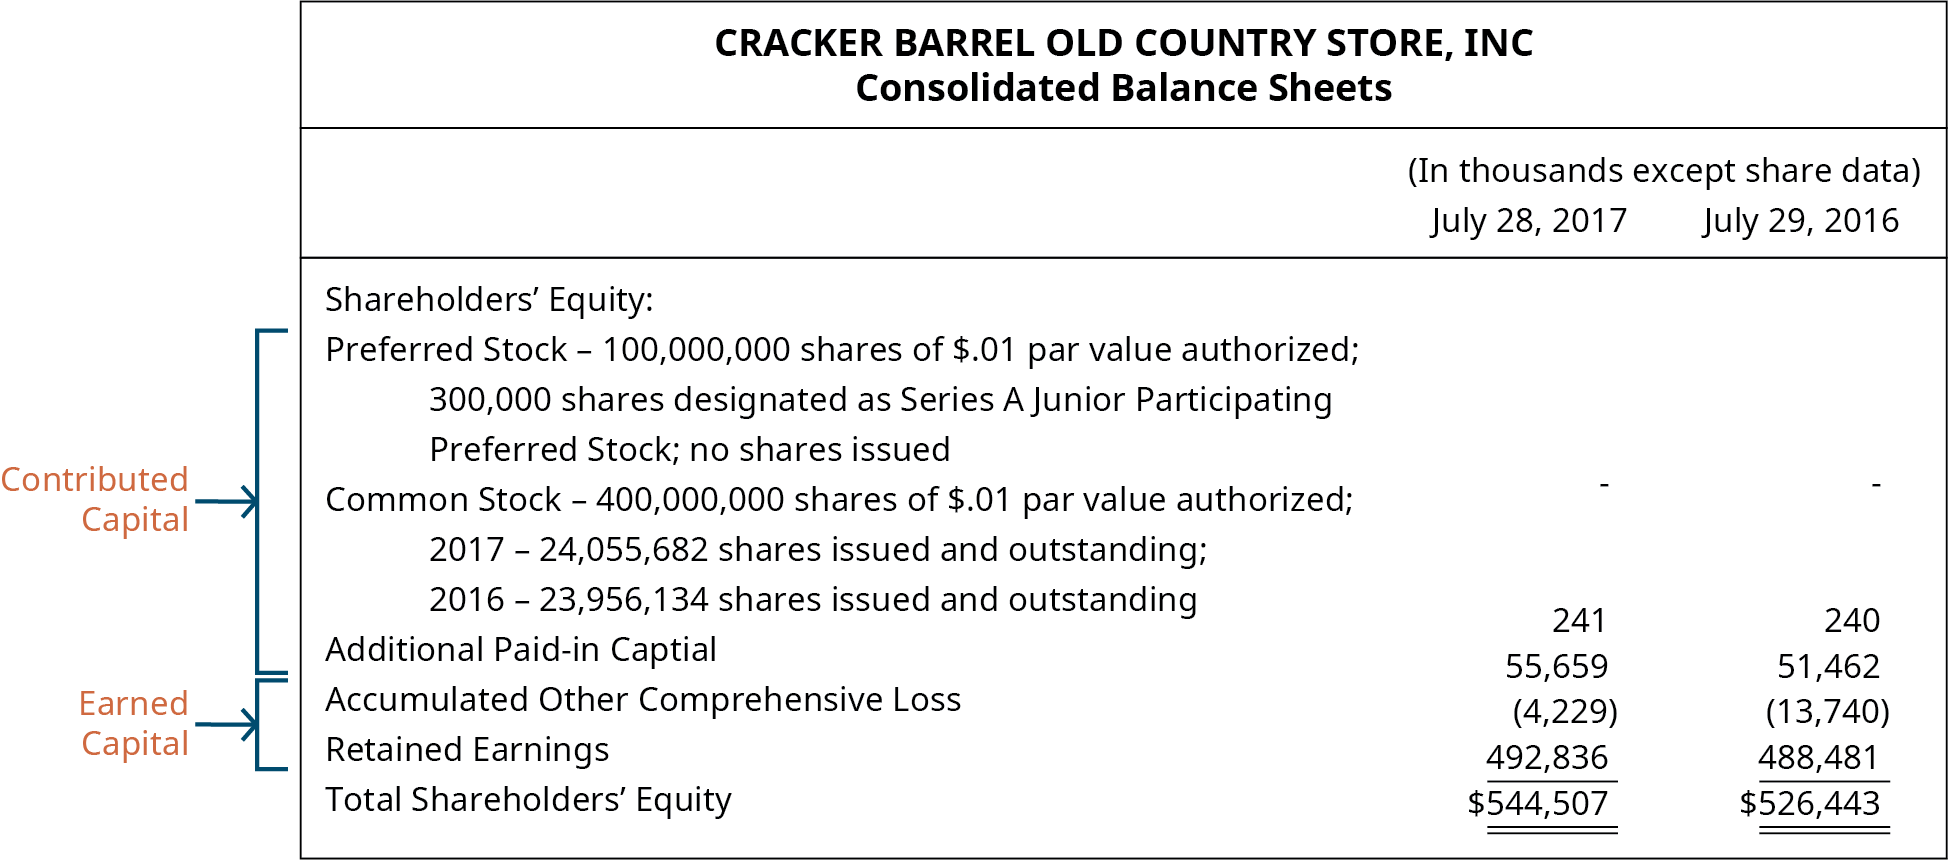 Cracker Barrel 老乡村商店有限公司，合并资产负债表。 （以千股为单位，股票数据除外）分别为2017年7月28日和2016年7月29日：股东权益：优先股——授权面值0.01美元的1亿股；300,000股被指定为A系列初级参与优先股；未发行股票。 普通股——授权面值0.01美元的4亿股股票；2017年——已发行和流通的24,055,682股；2016年——23,956,134股已发行和流通241、240股。 额外的实收资本55,659、51,462。 累计的其他综合亏损（4,220），（13,740）。 留存收益 492,836、488,481。 股东权益总额为544,507，526,443。 围绕优先股、普通股和额外实收资本的括号表示它们构成了出资资本。 围绕累计其他综合亏损和留存收益的括号表示它们构成了所得资本。